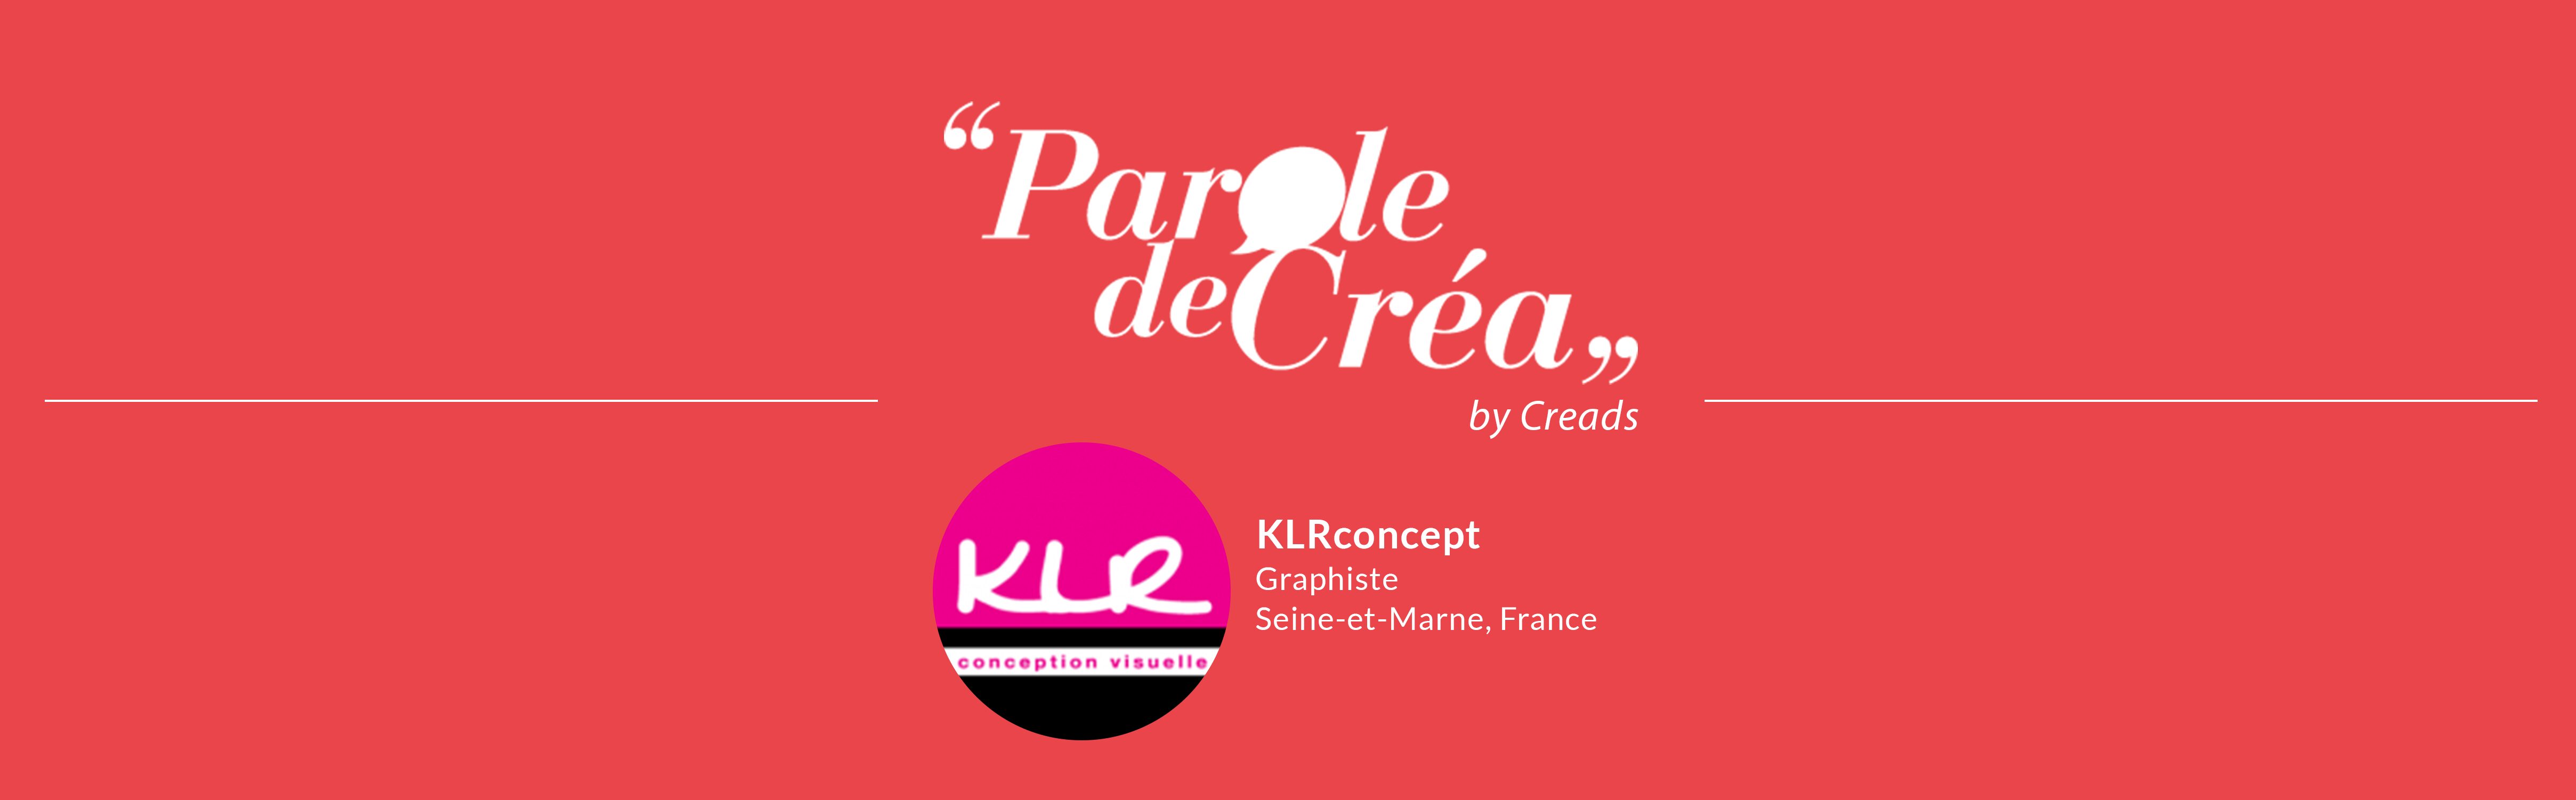 KLRconcept graphiste freelance France